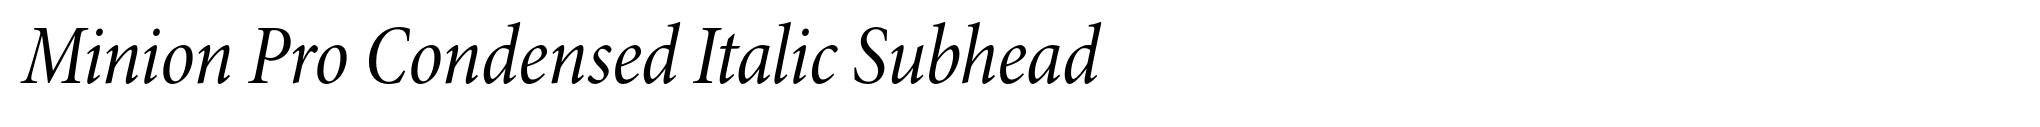 Minion Pro Condensed Italic Subhead image